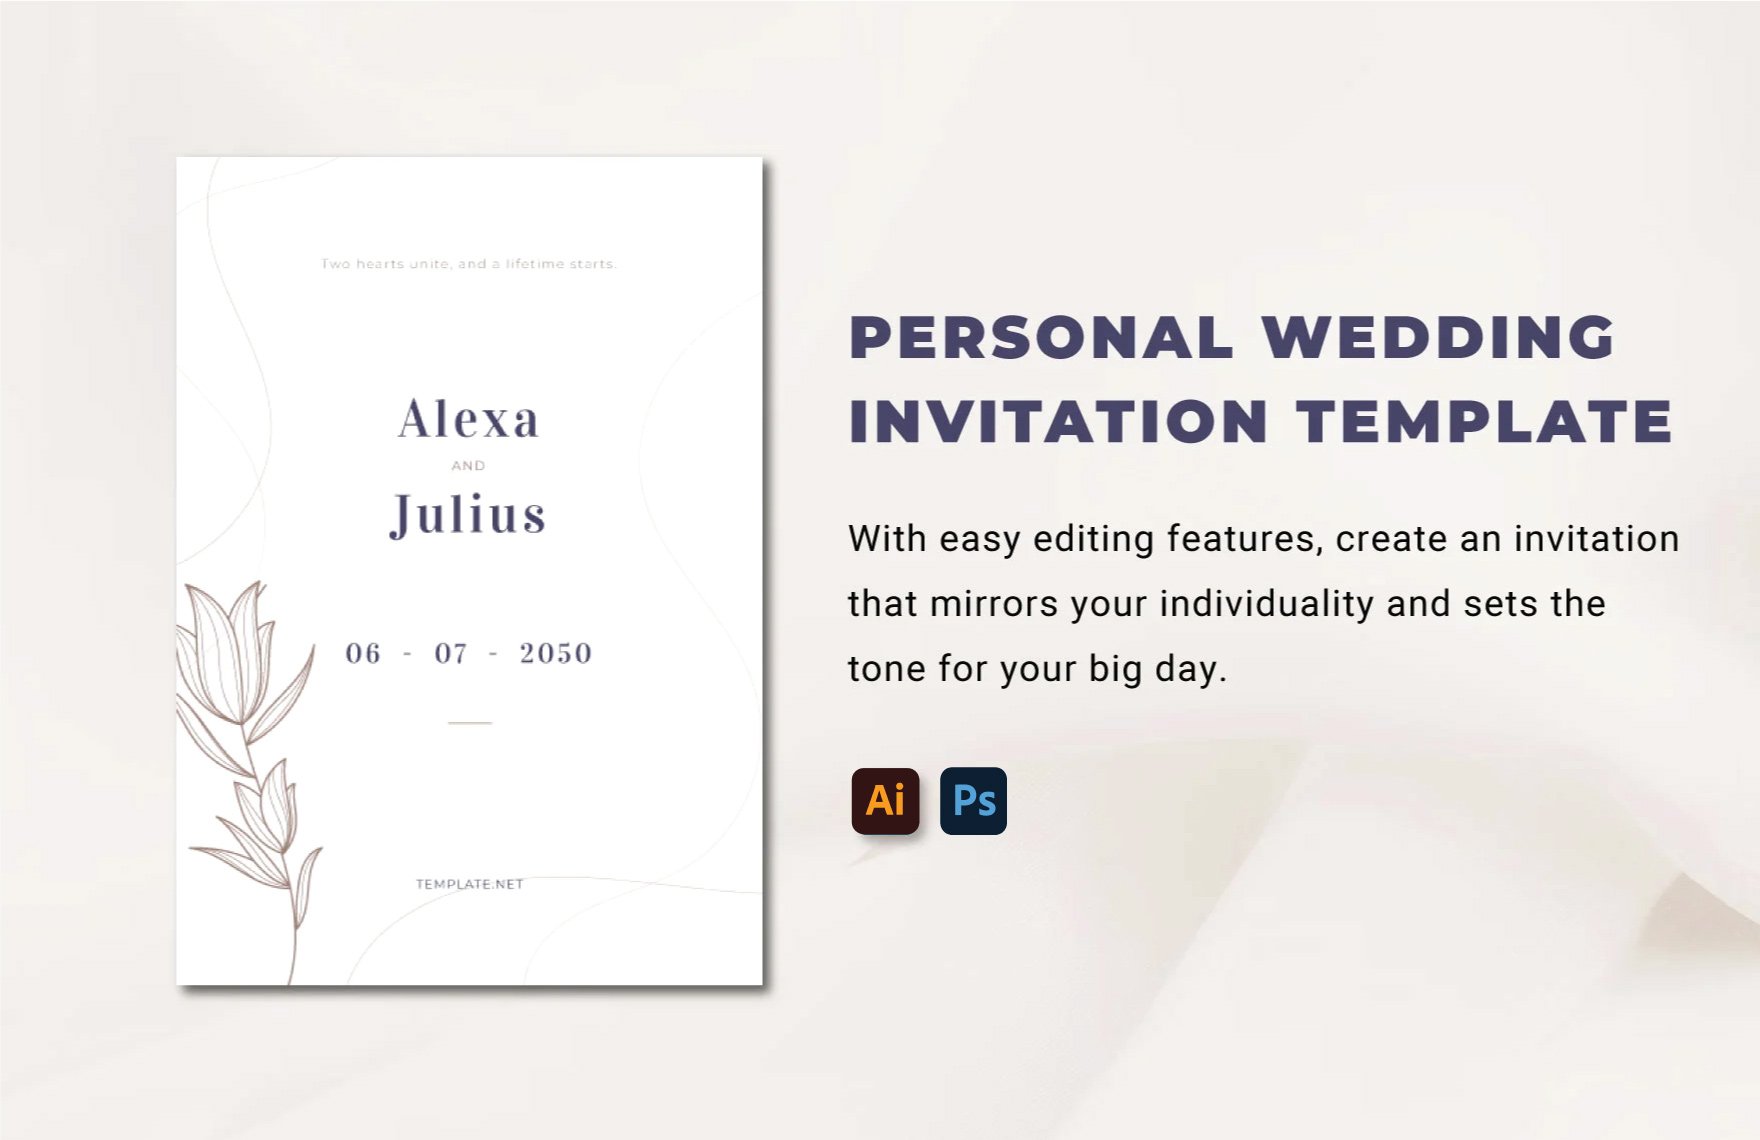 Personal Wedding Invitation